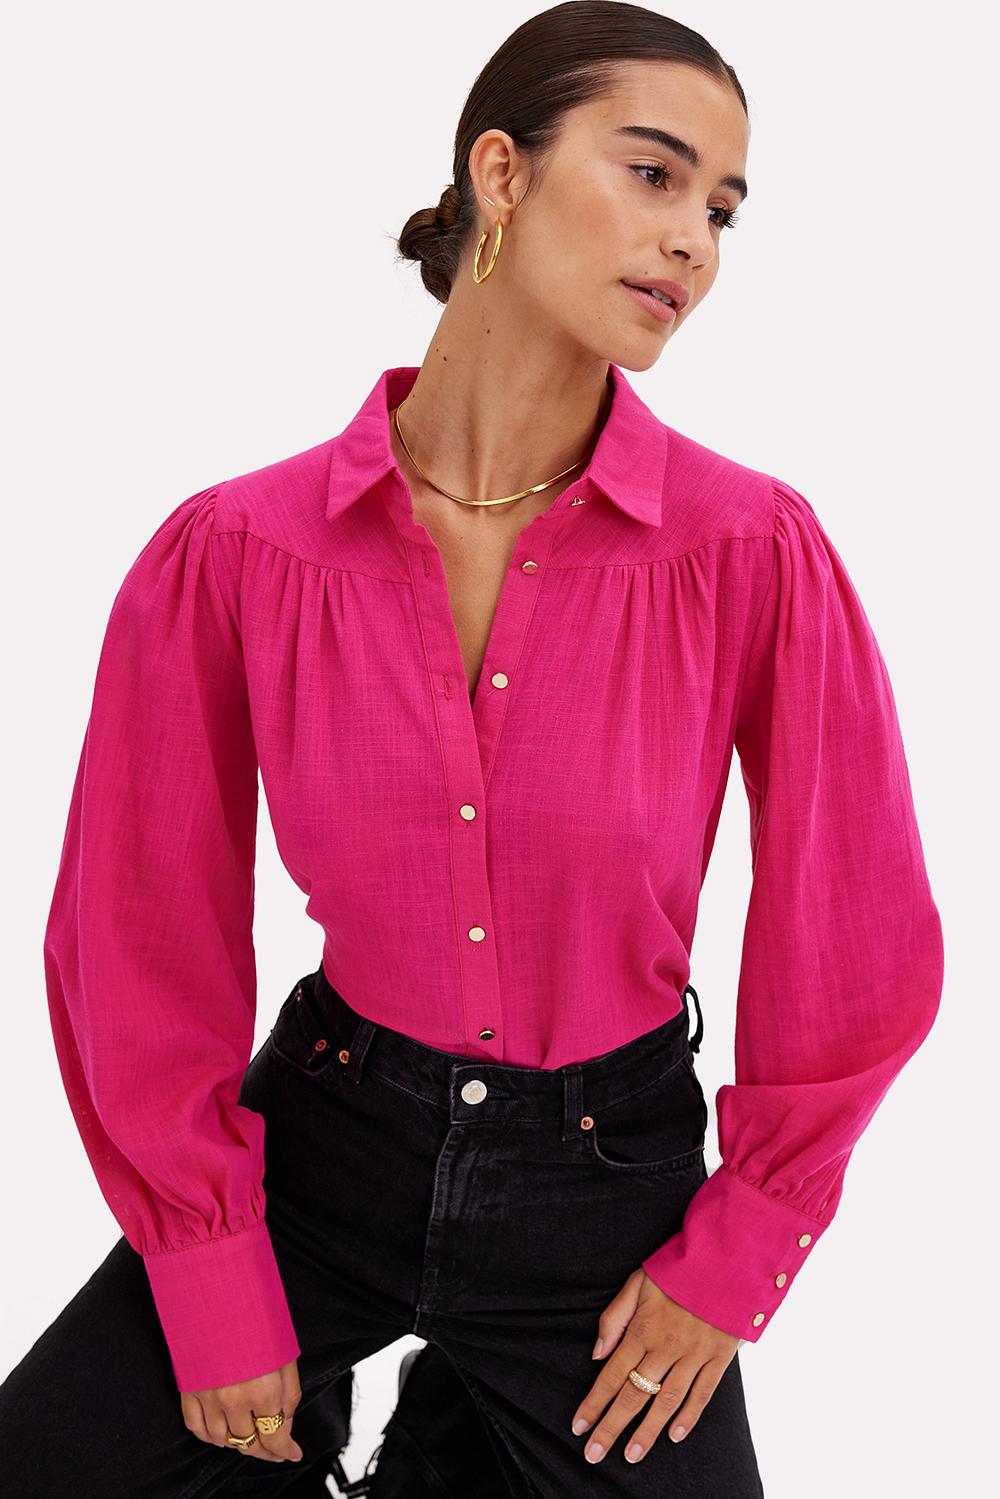 Fuchsia blouse